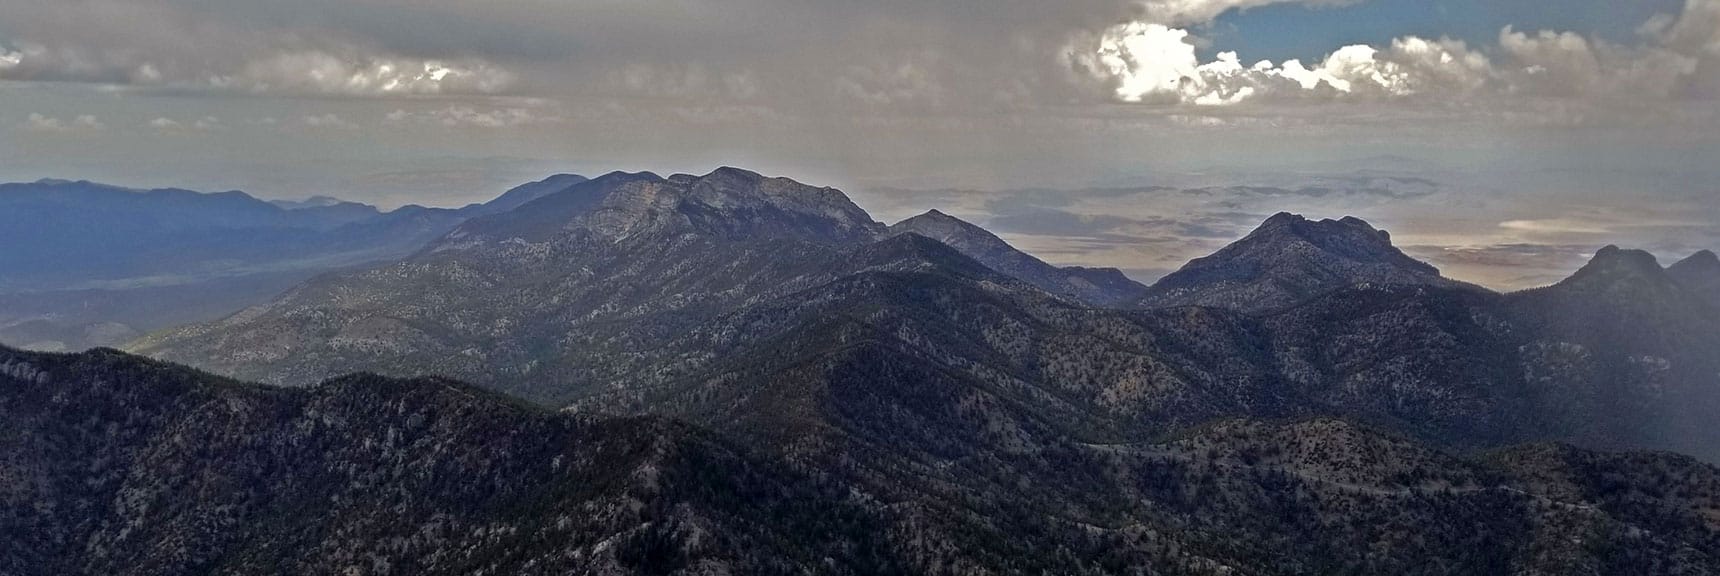 McFarland Peak, Macks Peak and Sisters South from Lee Peak Summit | Lee Peak Summit via Lee Canyon Mid Ridge | Mt. Charleston Wilderness | Spring Mountains, Nevada